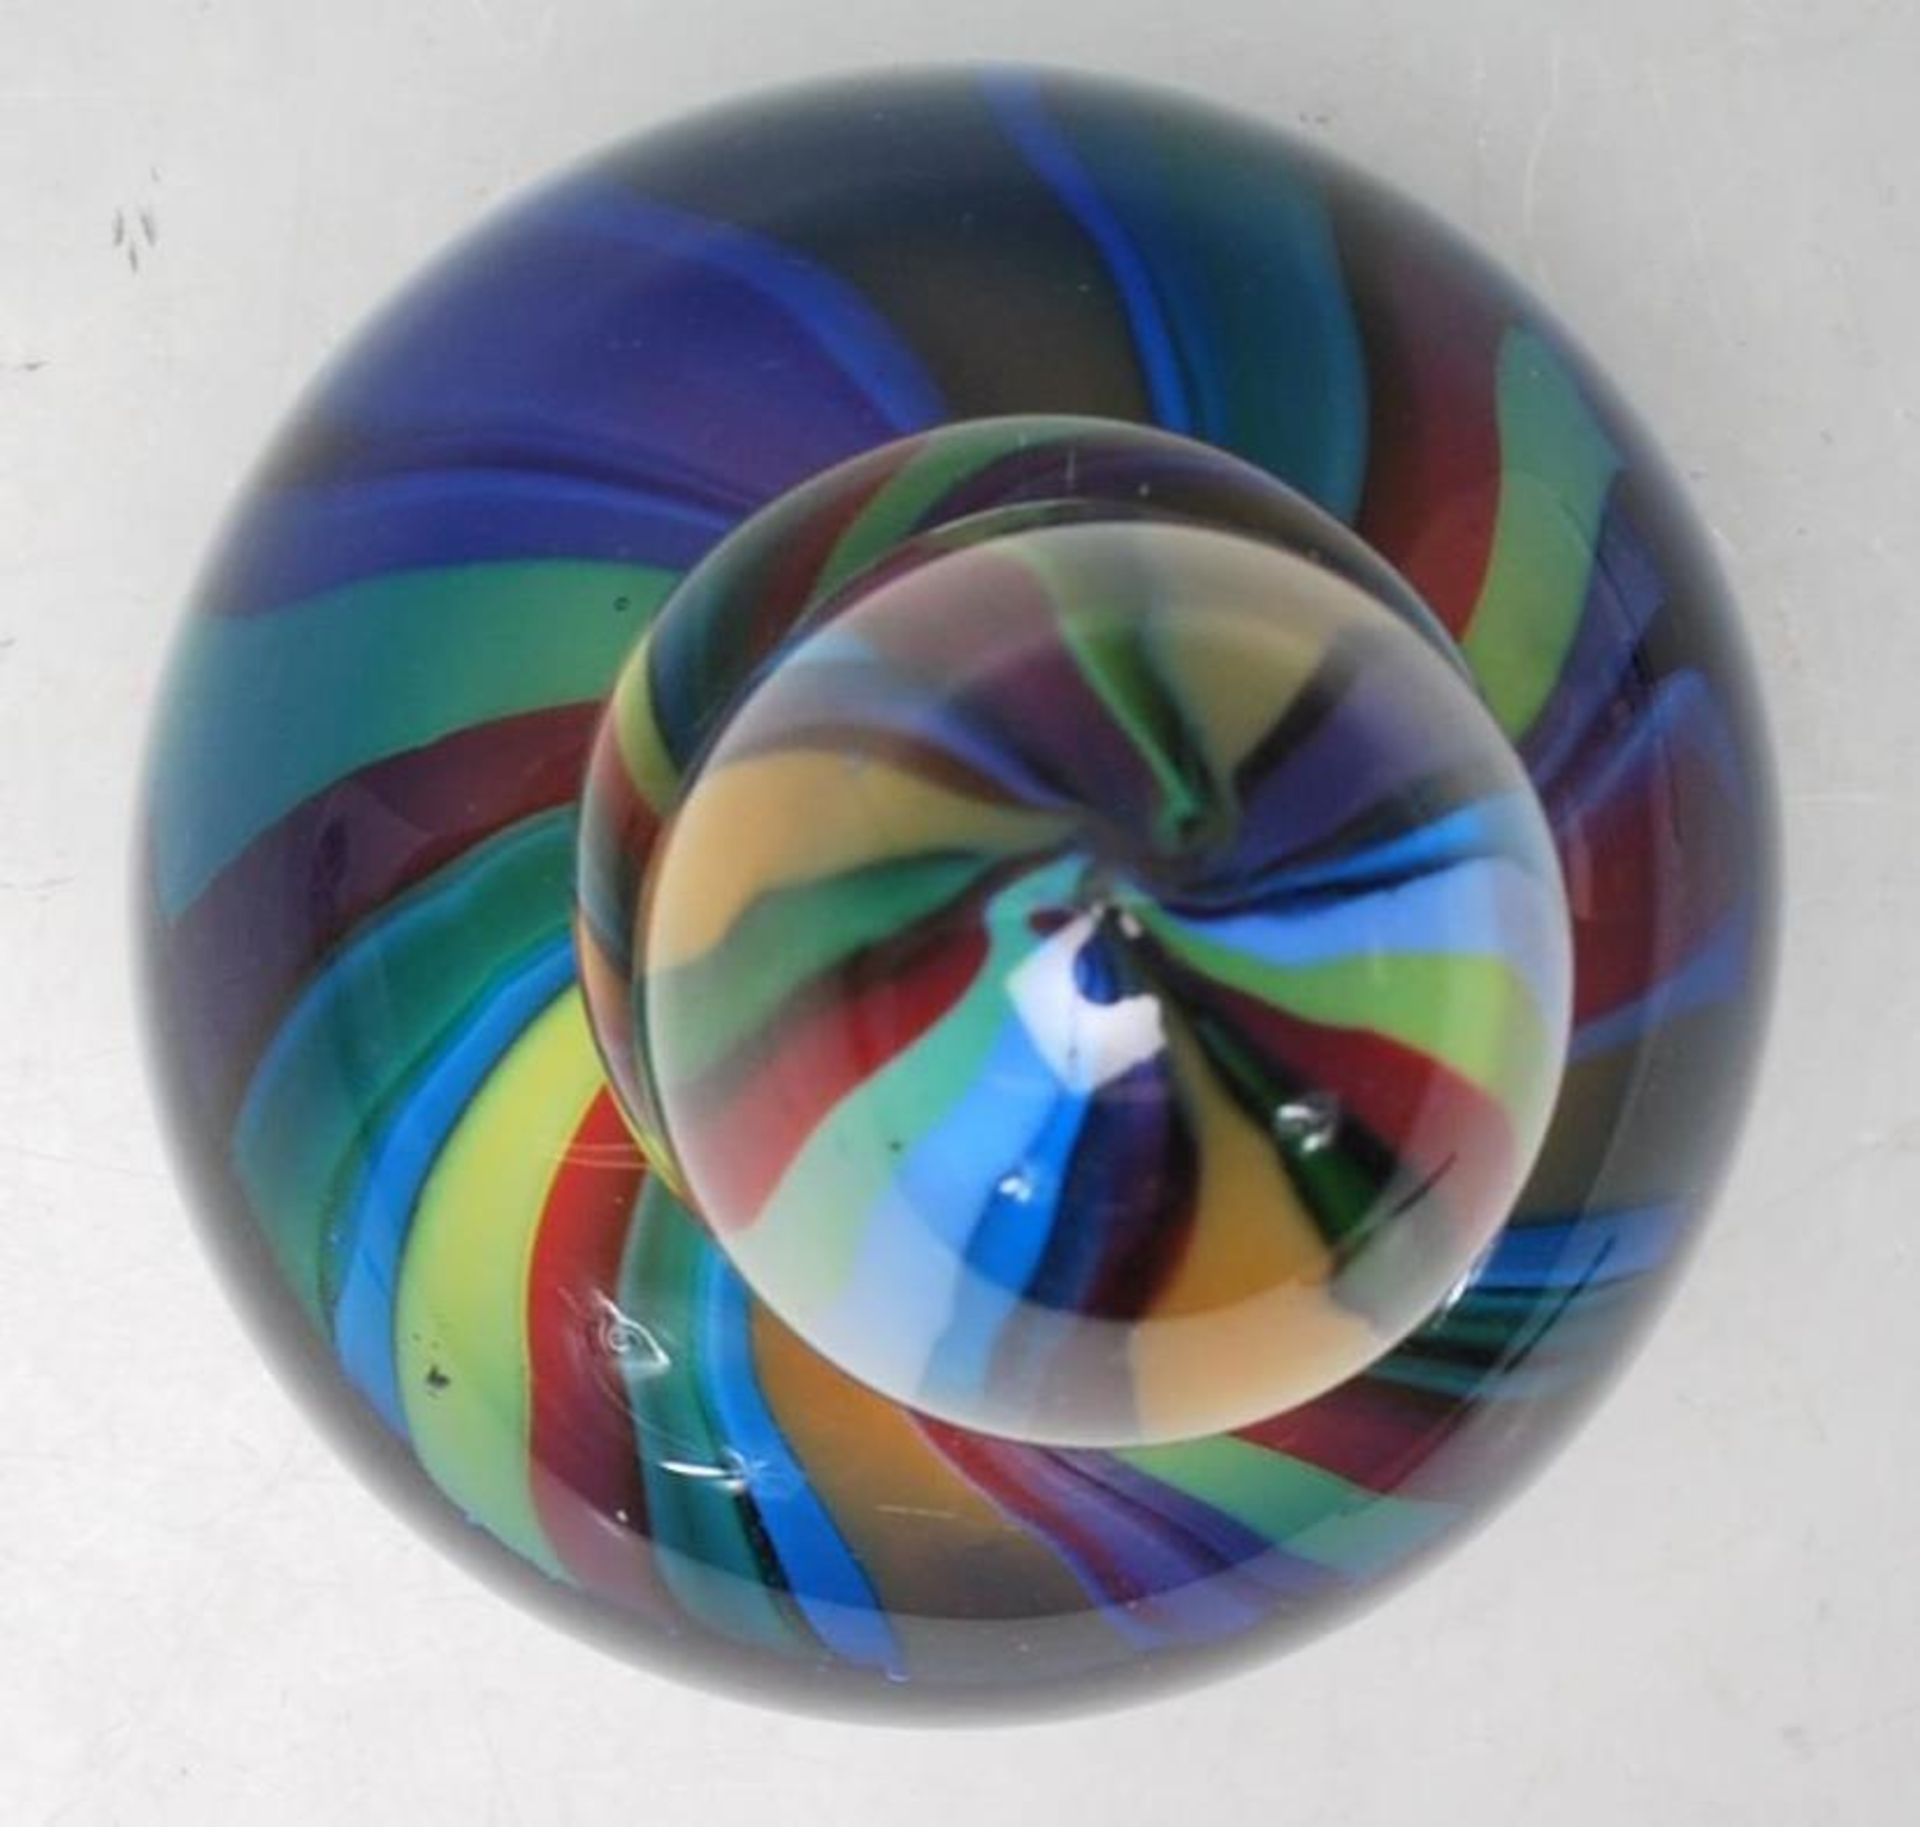 MURANO STUDIO ART GLASS PERFUME BOTTLE WITH MULTICOLOURED TWISTED DESIGN DECORATION - Image 4 of 5